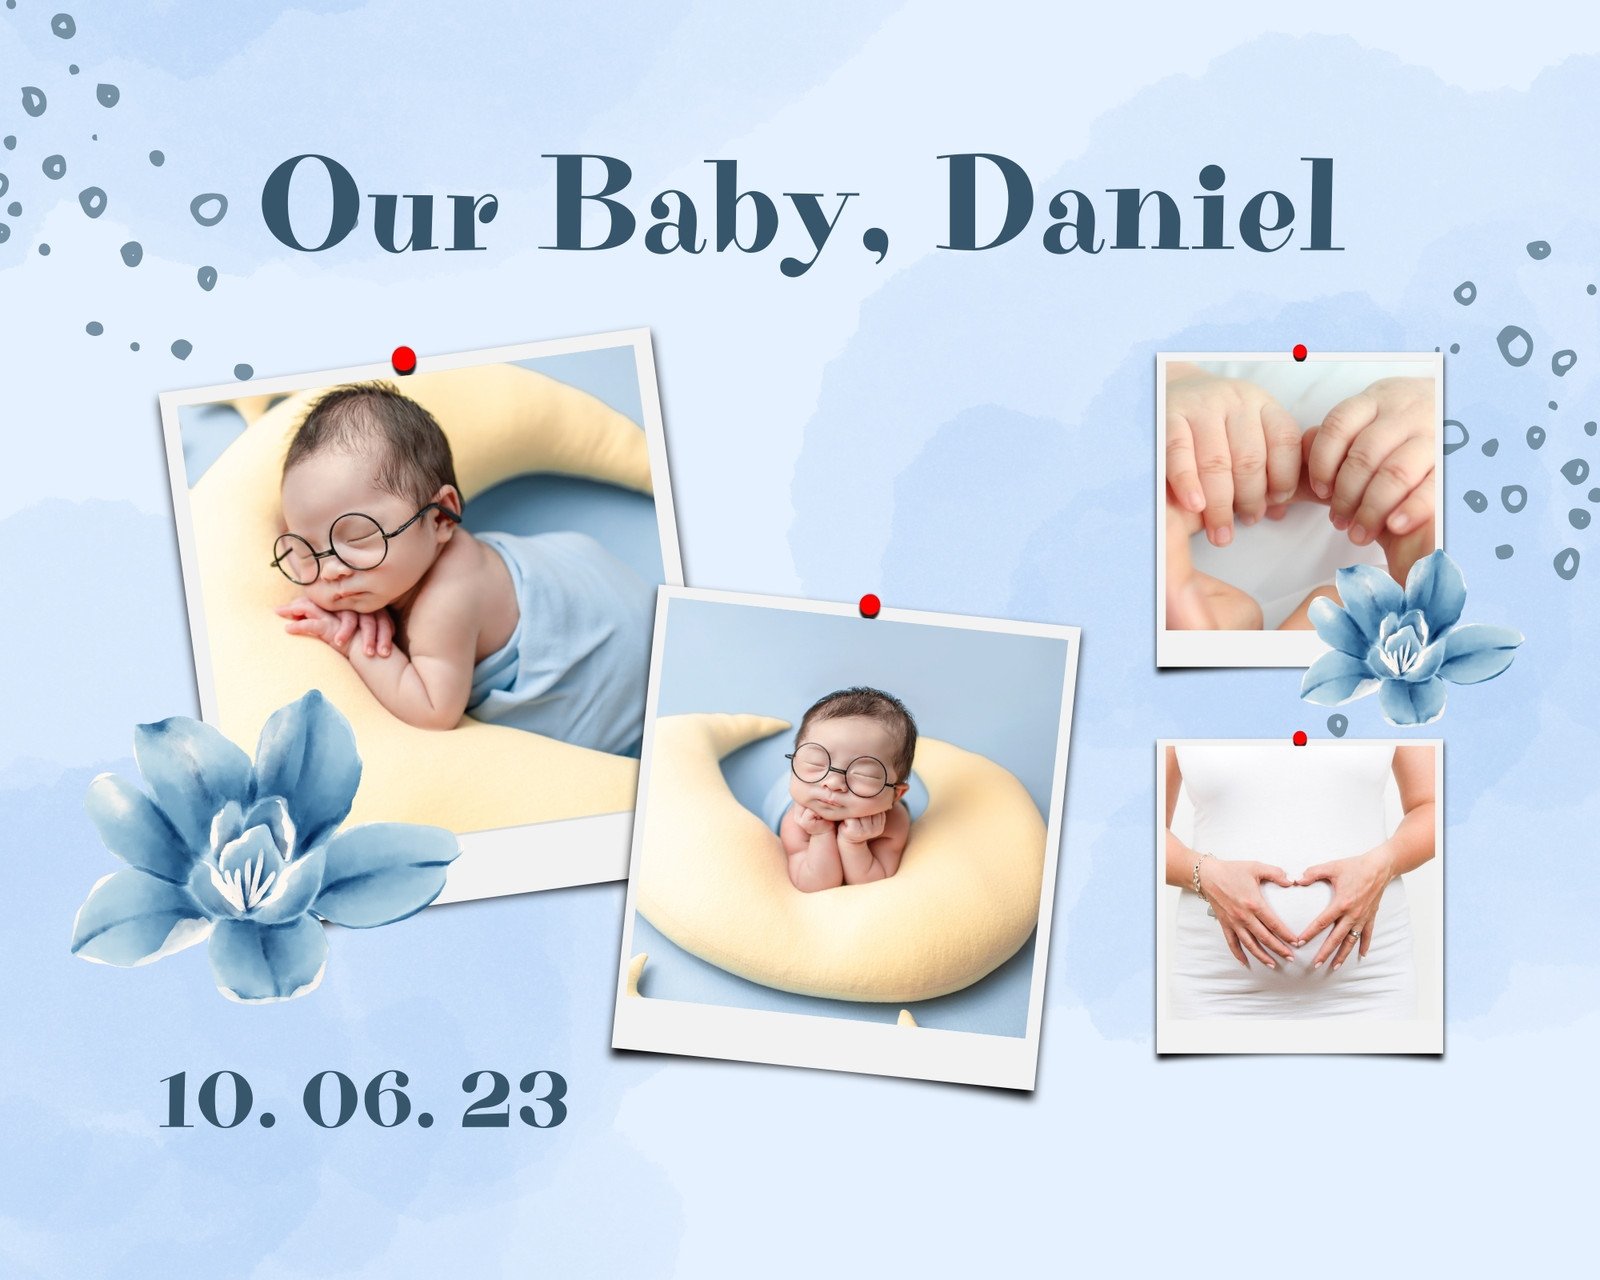 https://marketplace.canva.com/EAFVaE6zmb4/1/0/1600w/canva-light-blue-navy-cute-baby-birth-photo-collage-QZunnwSE2-w.jpg